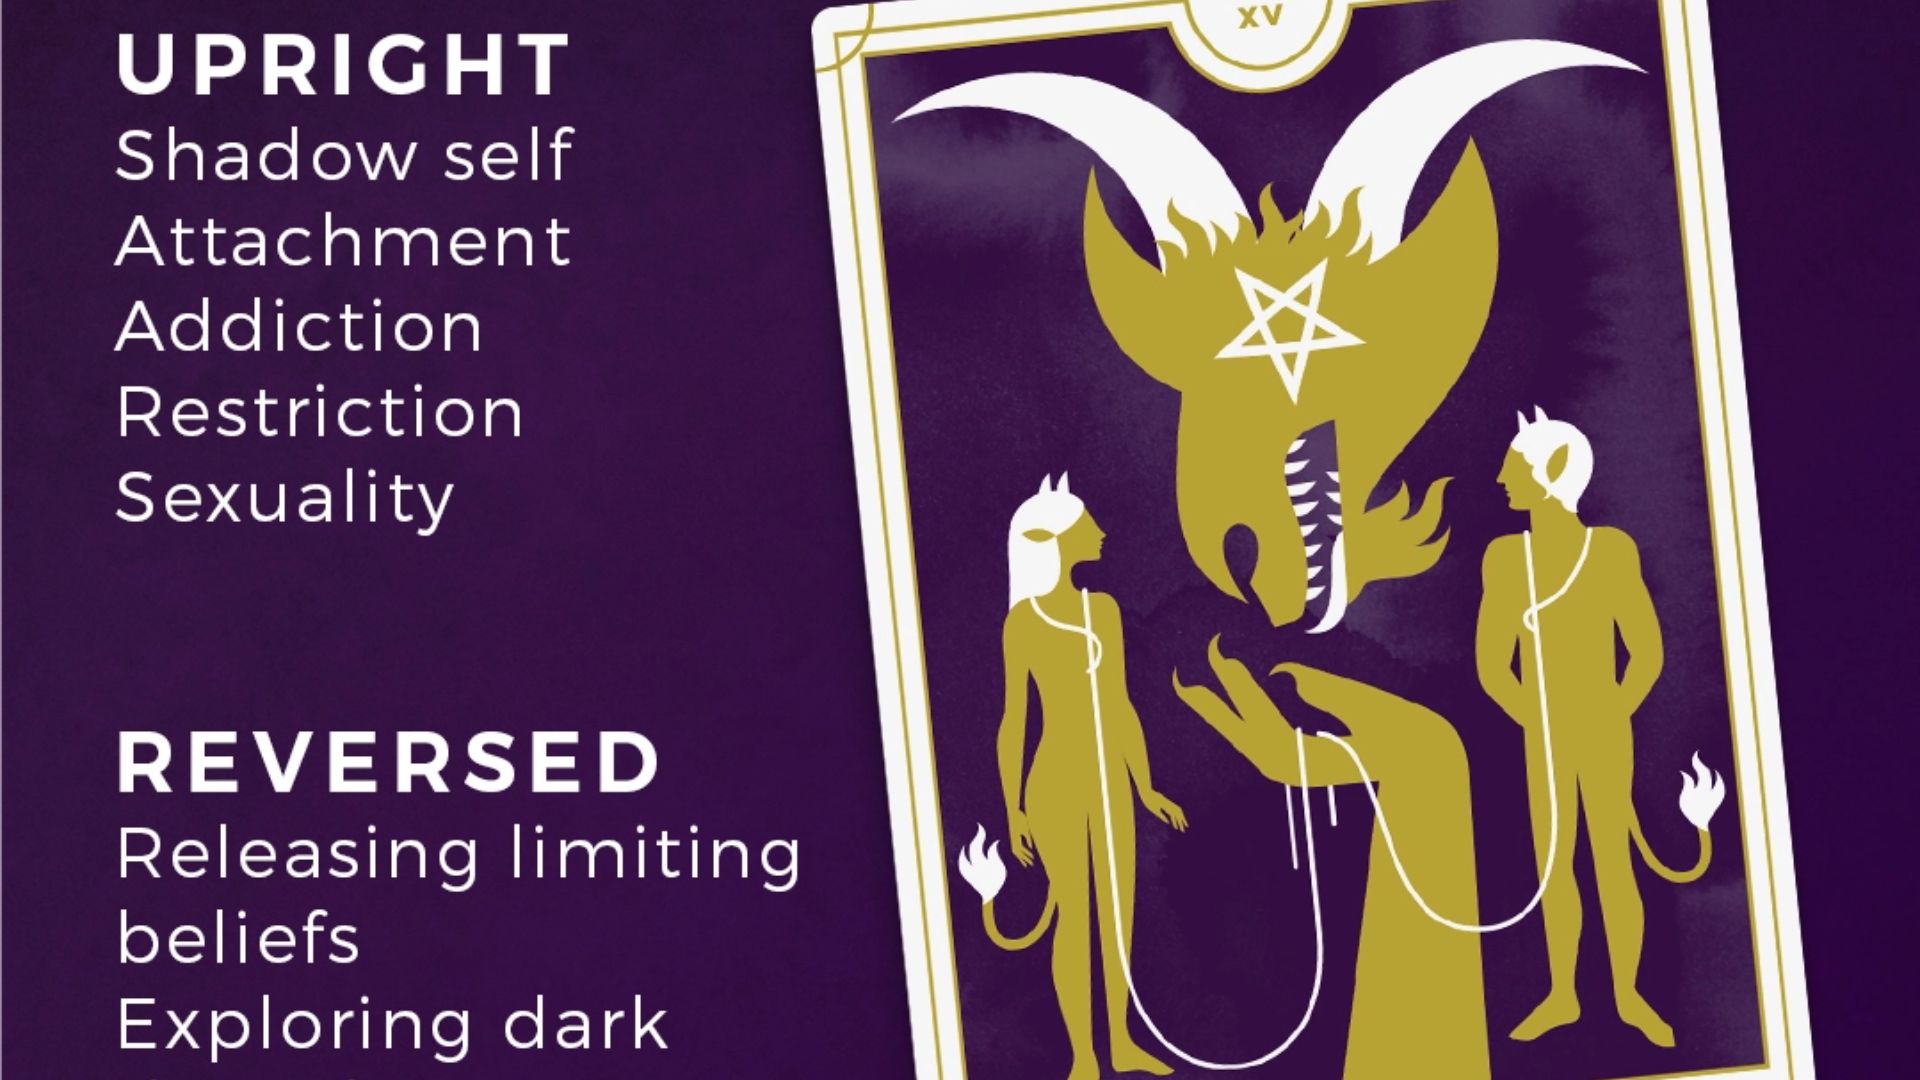 Devil Tarot Card With Description